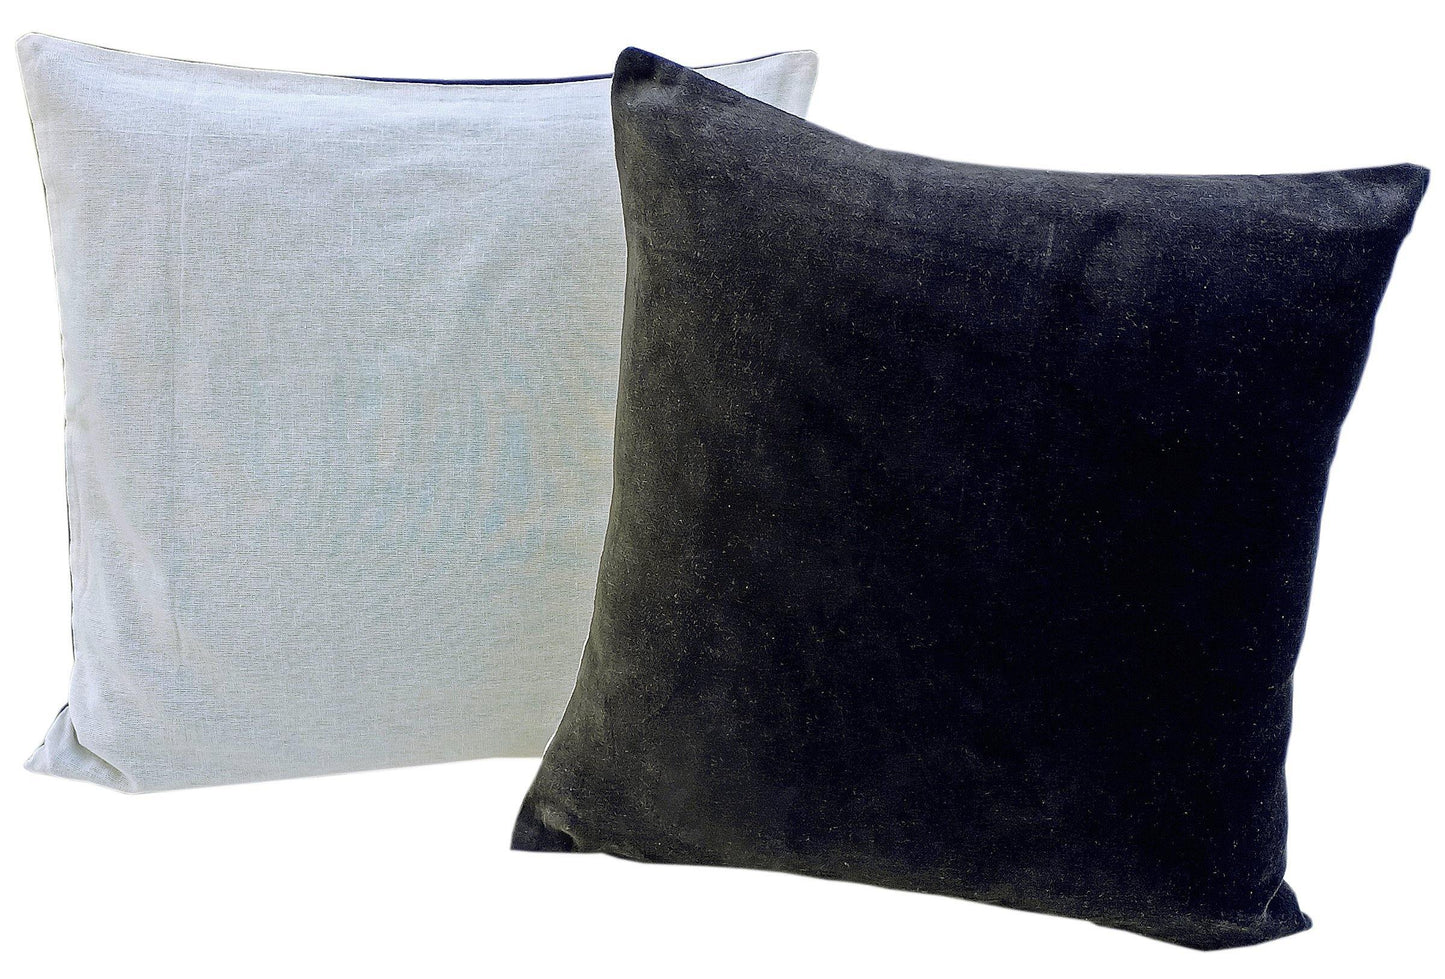 Solid Black Velvet Cushion Cover - The Teal Thread